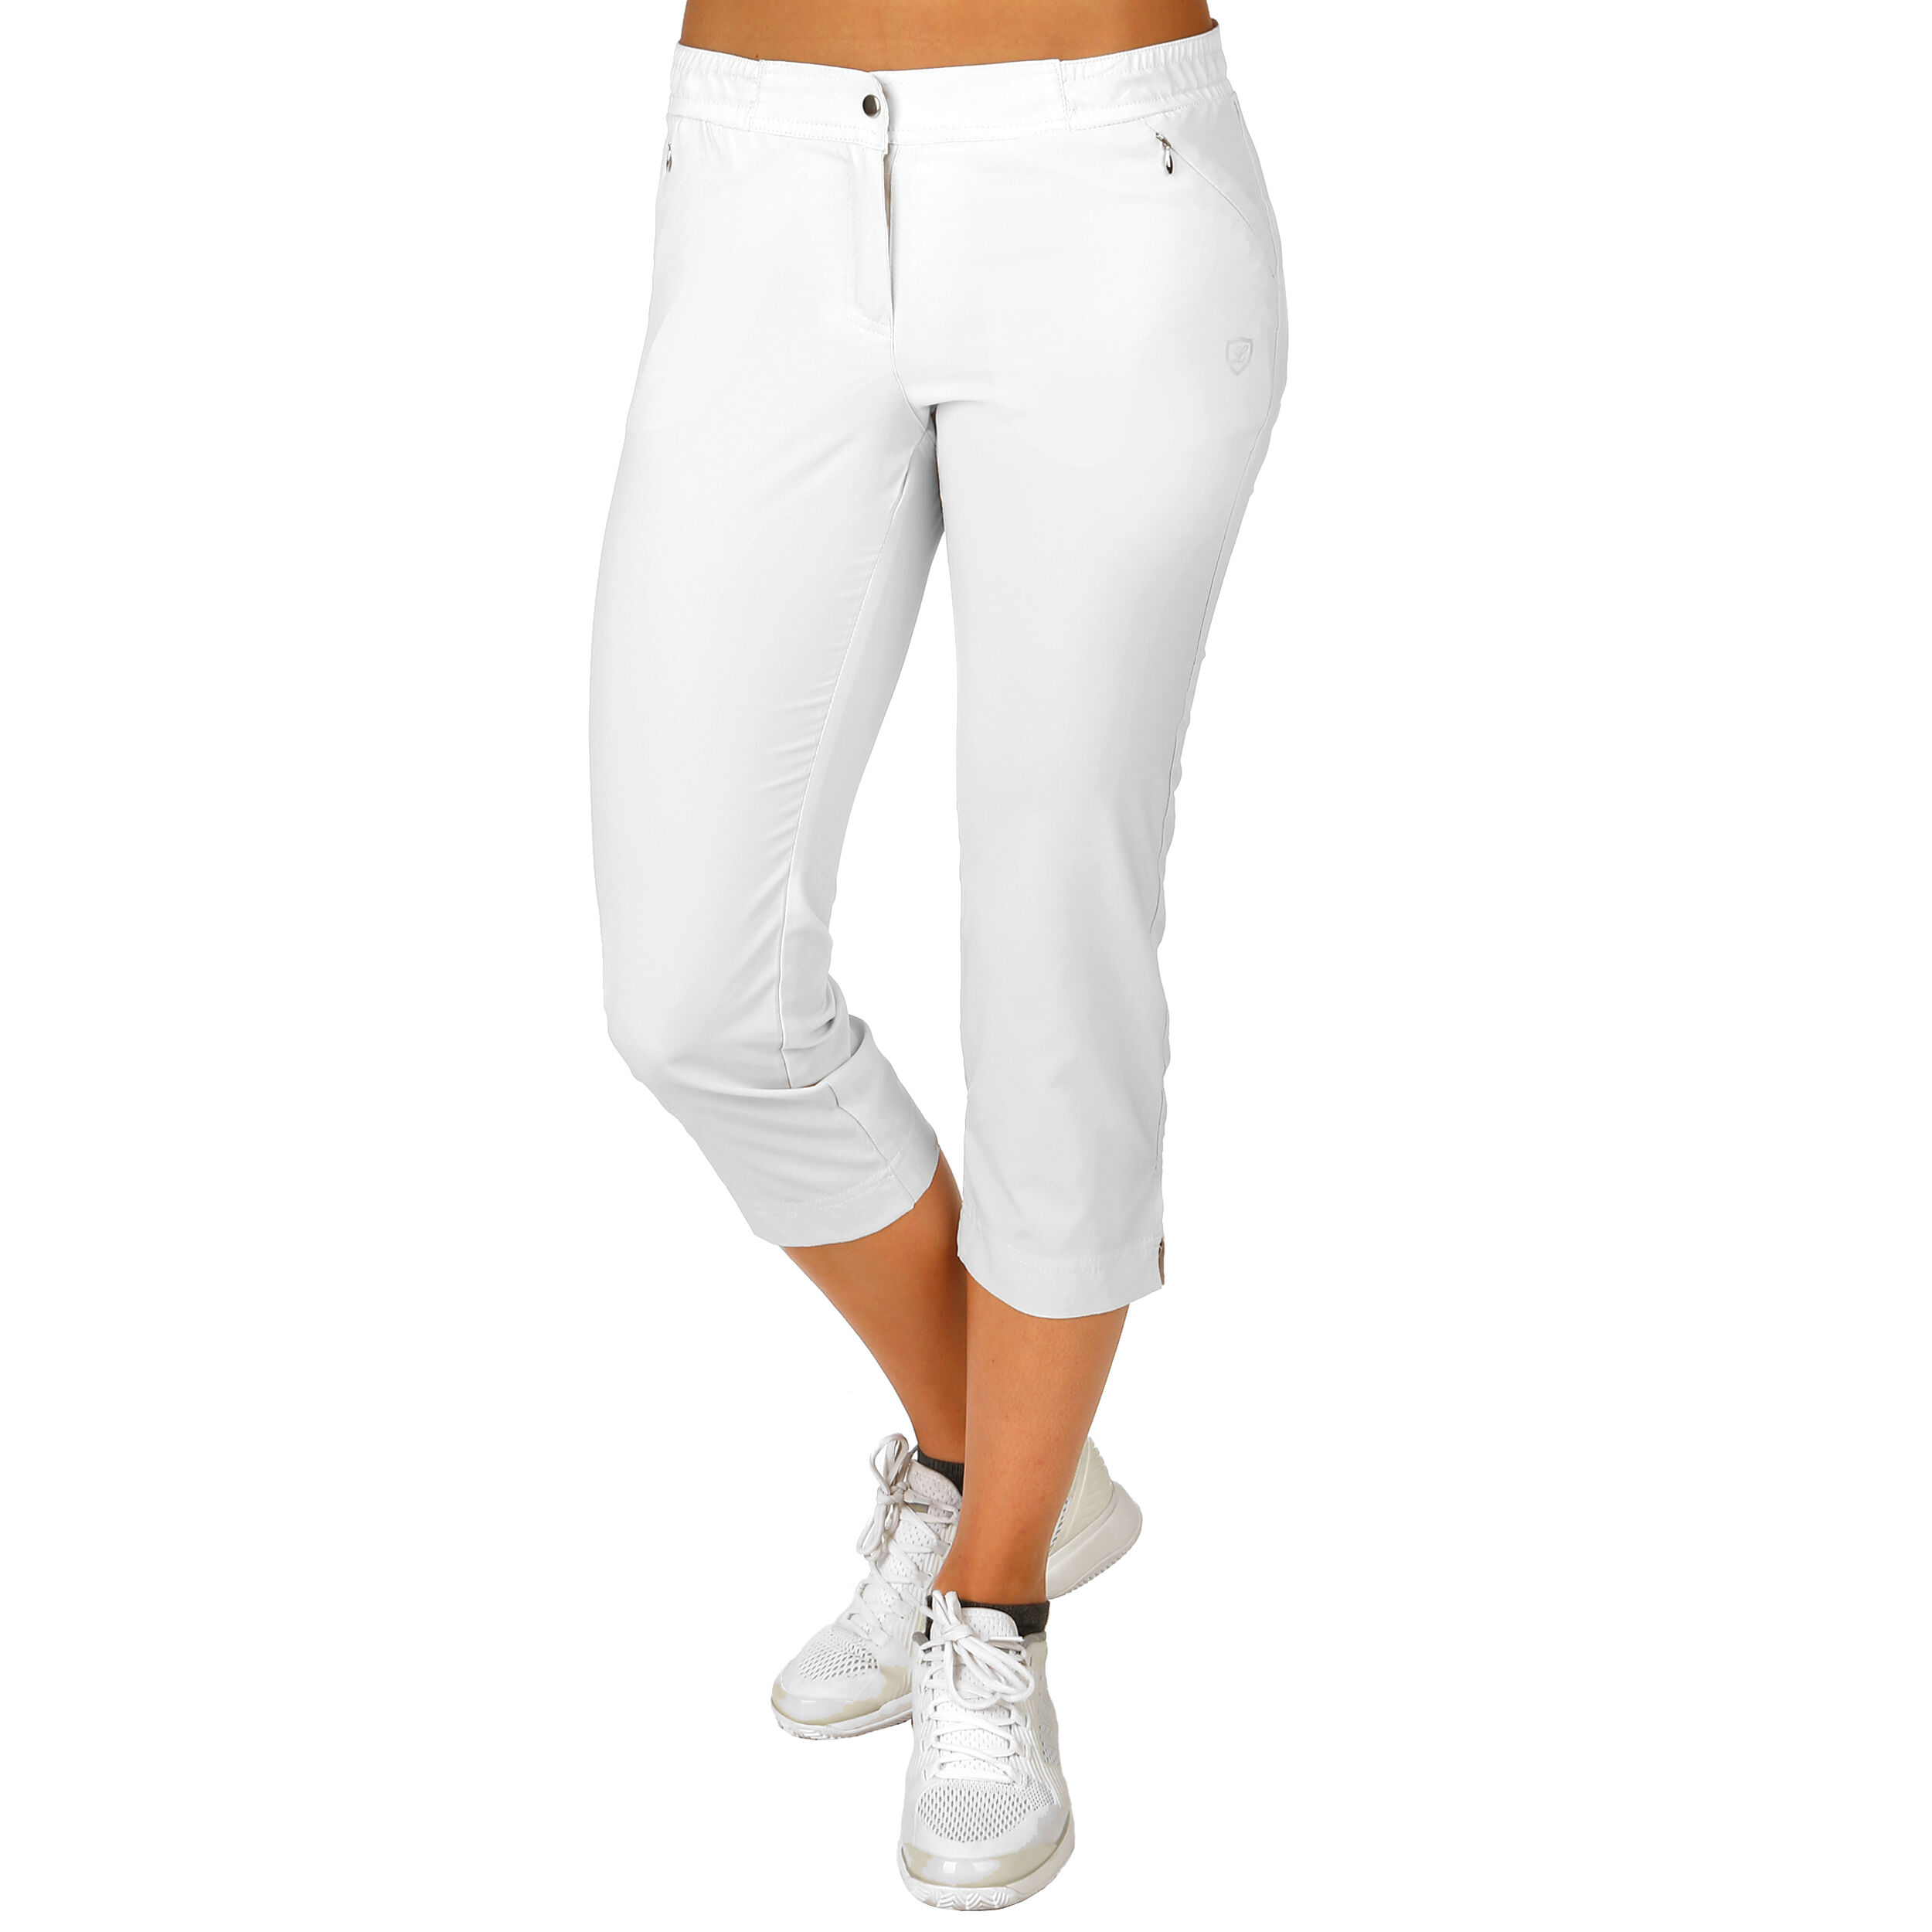 SEASUM Women Yoga Pants Heart Shape Patchwork Leggings High Waist Capris  Workout Sport Fitness Gym Tights #5 Comb Black Large